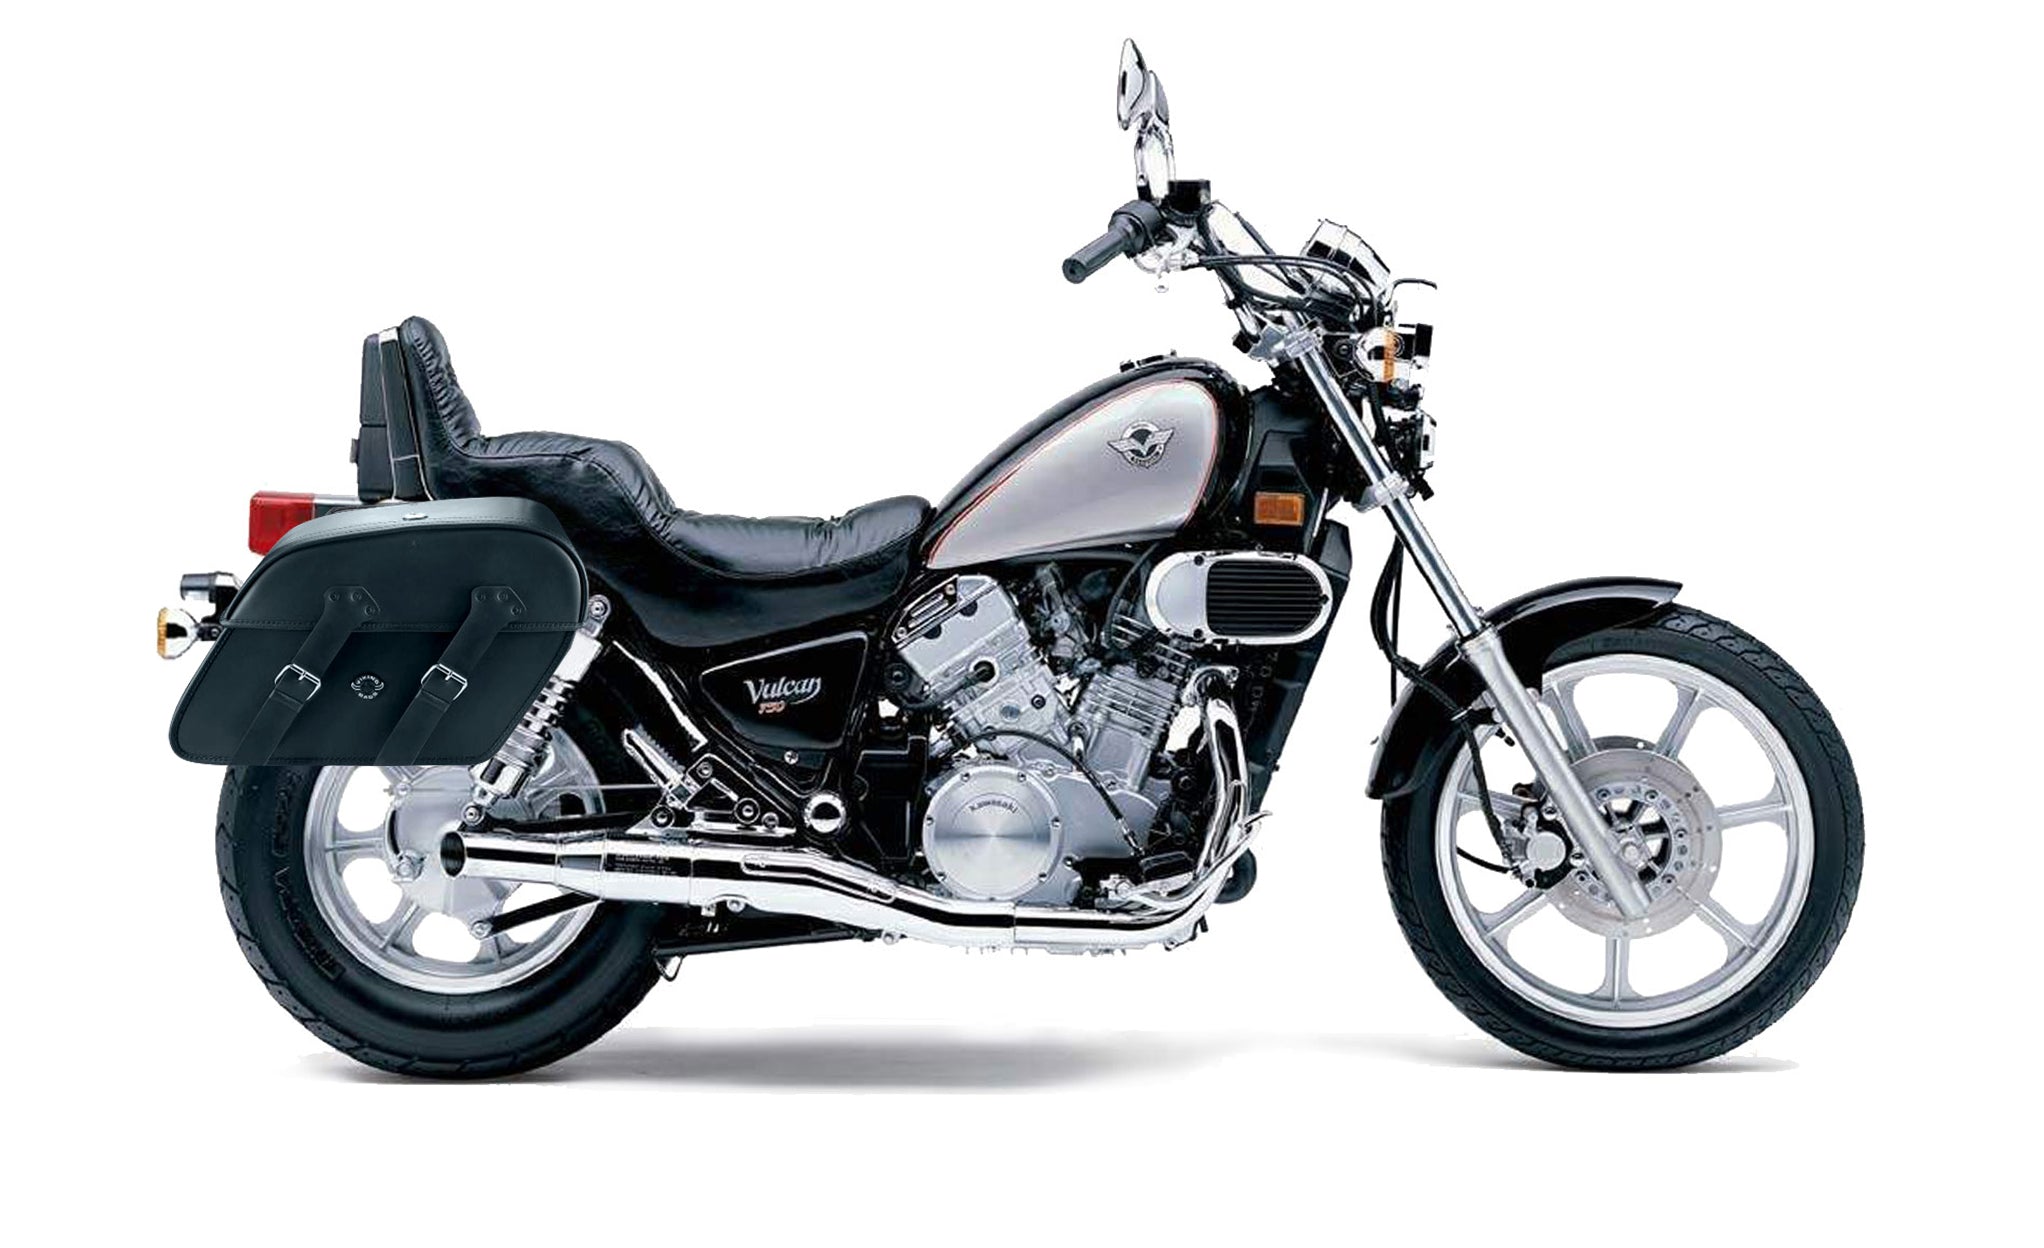 Viking Raven Extra Large Kawasaki Vulcan 750 Vn750 Leather Motorcycle Saddlebags on Bike Photo @expand